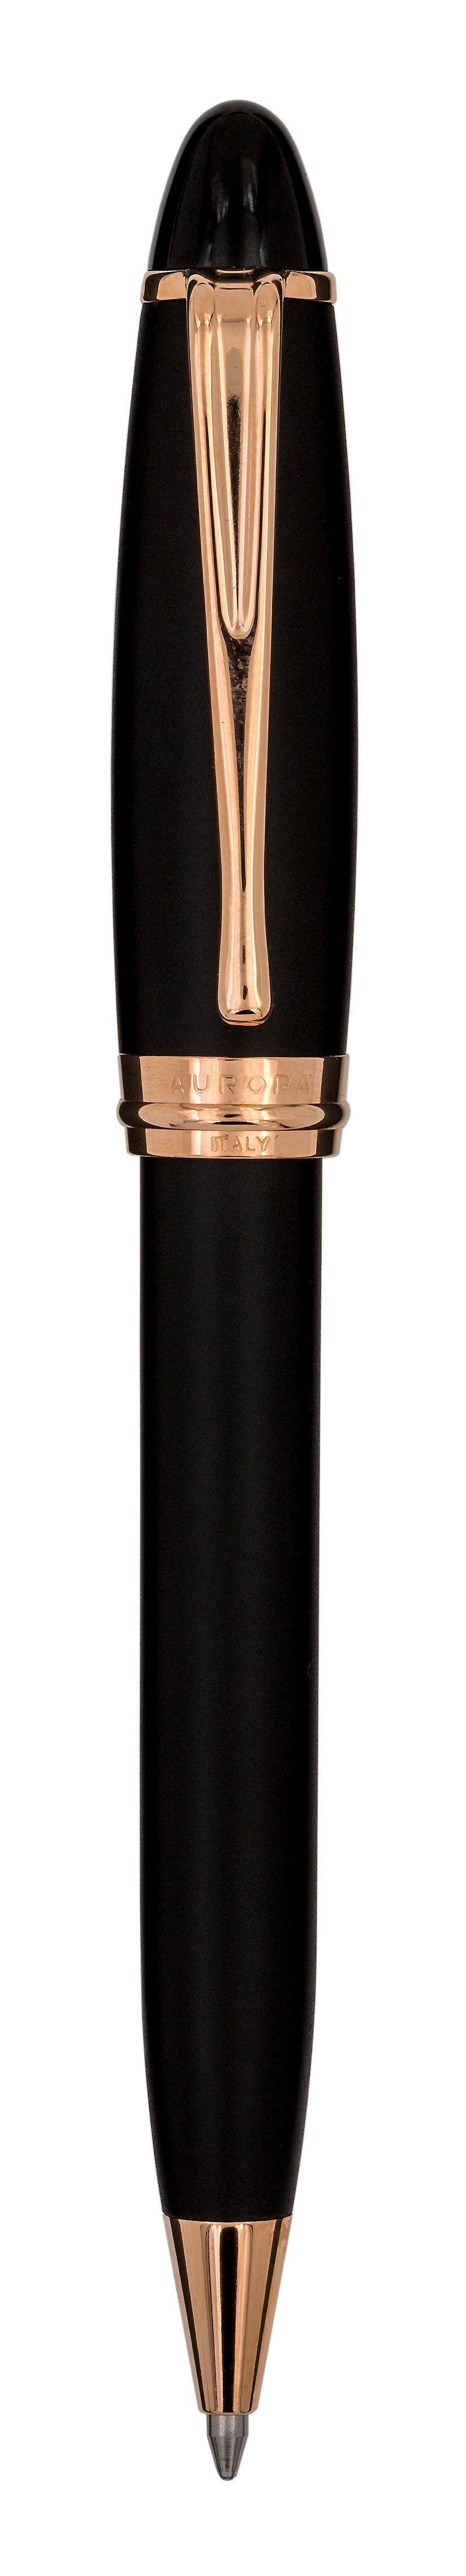 Aurora Ipsilon Satin Black with Rose Gold Trims Ballpoint Pen